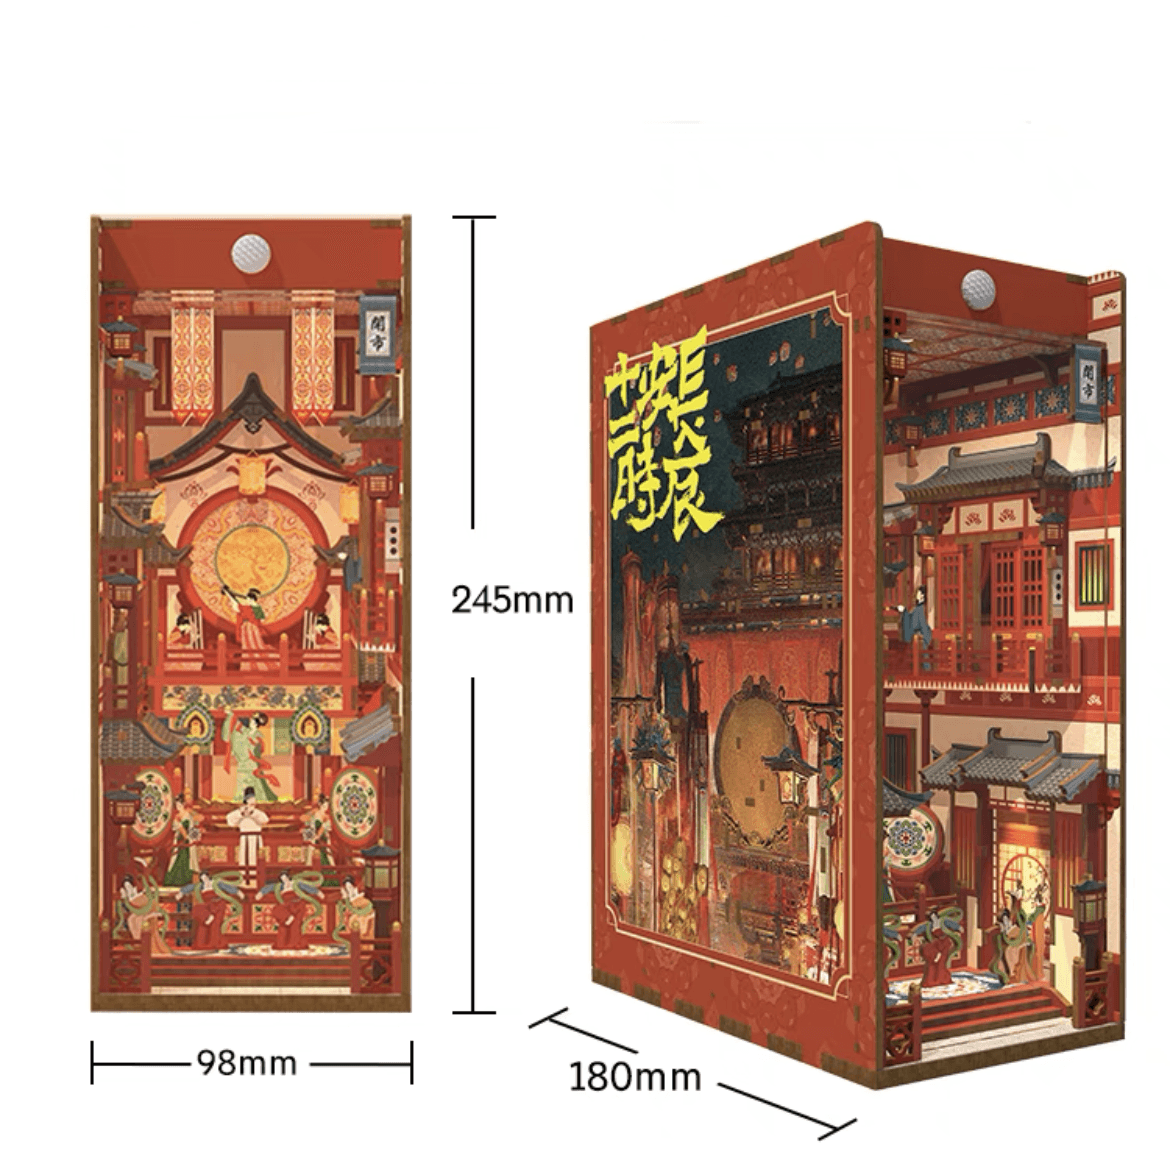 Tang Dynasty - Chang'an - Ancient China inspired diy book nook kit - shelf insert diorama - miniature crafts - size